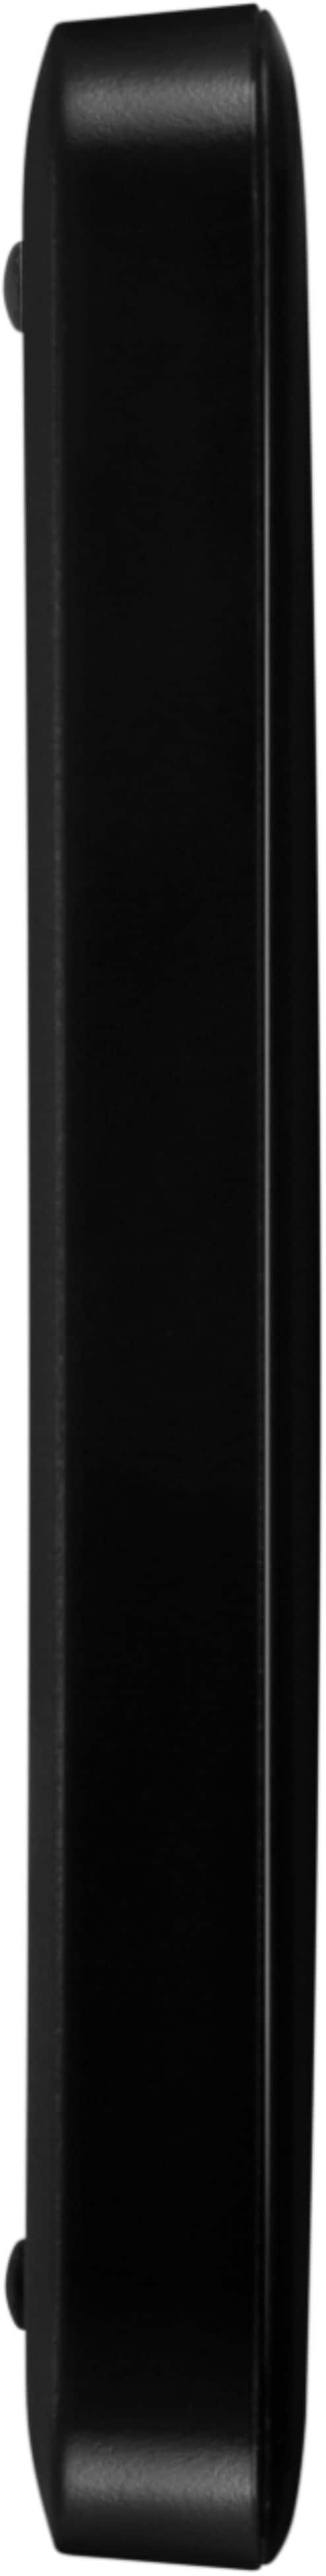 WD - Easystore 2TB External USB 3.0 Portable Hard Drive - Black_4